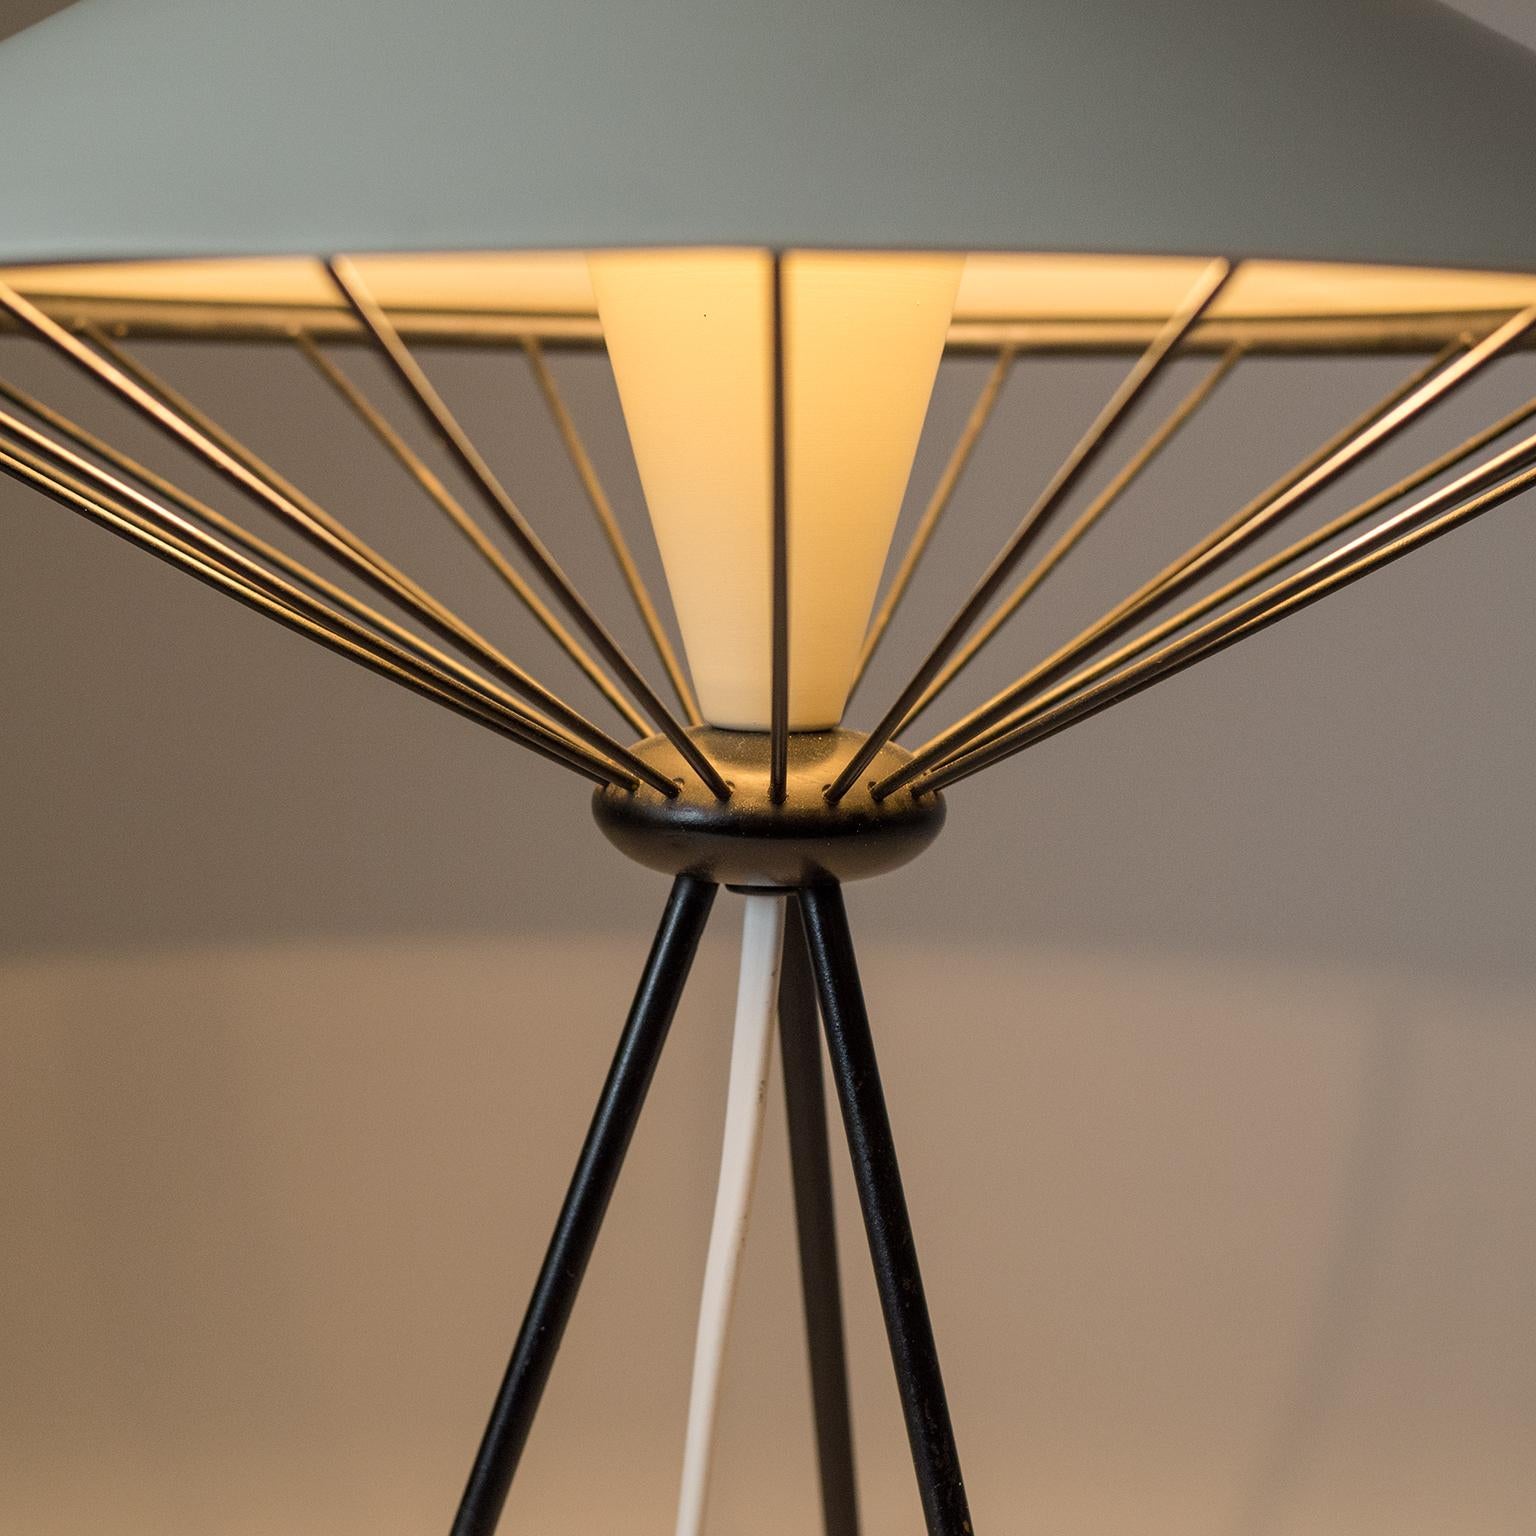 Modernist Italian Tripod Table Lamp, 1950s (Mitte des 20. Jahrhunderts)